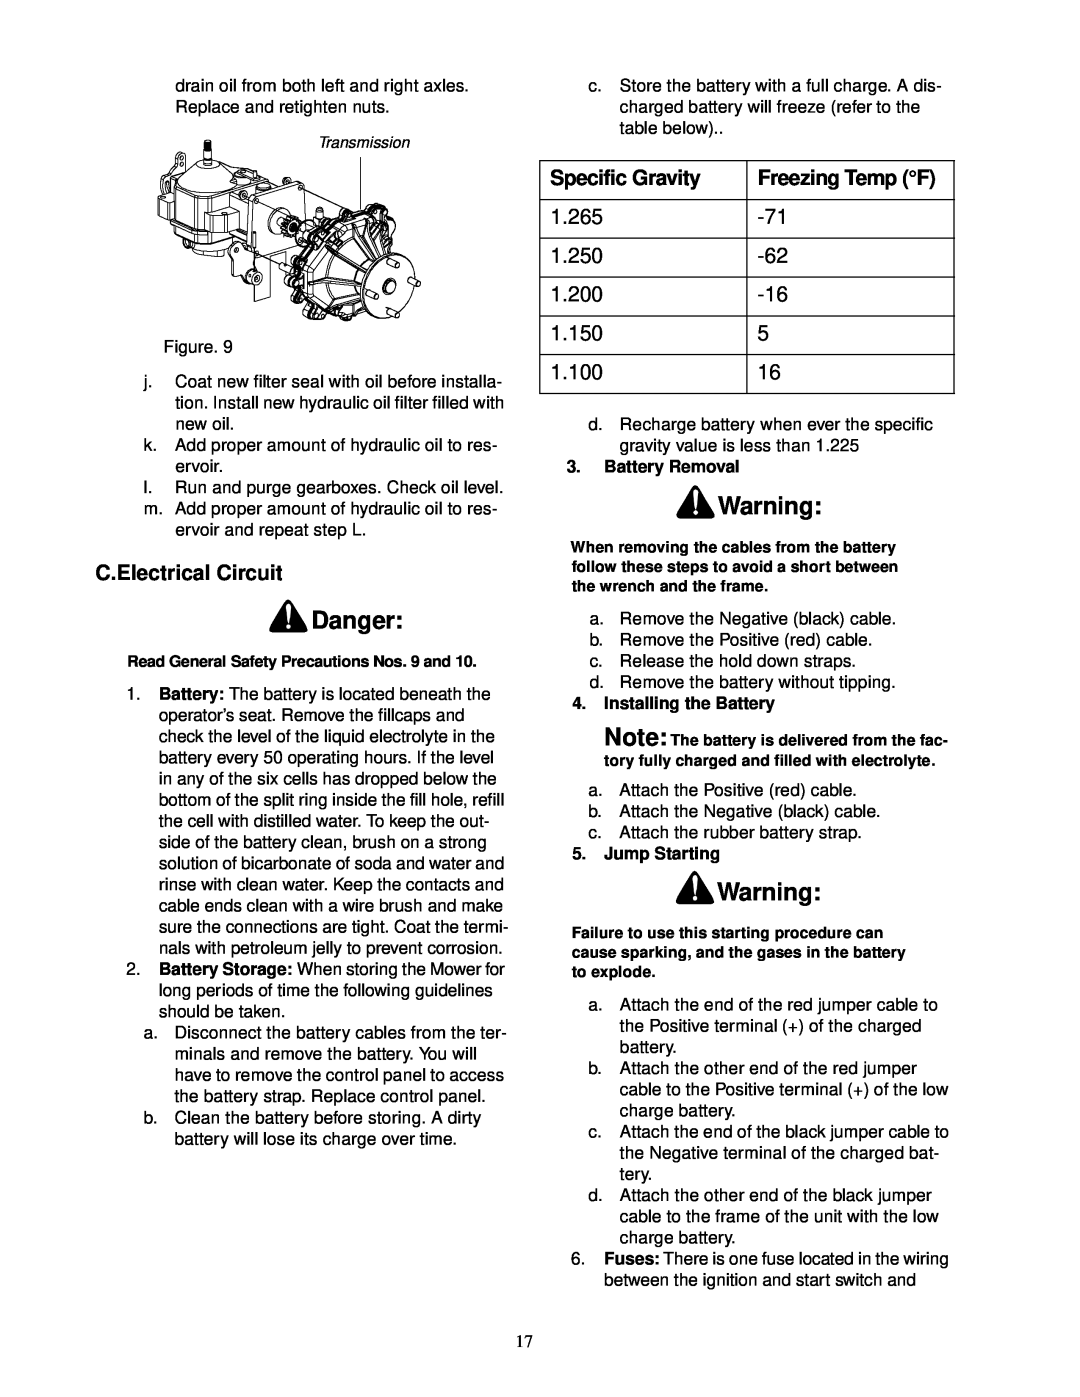 Cub Cadet 18HP service manual Danger, C.Electrical Circuit, Specific Gravity, Freezing Temp F 